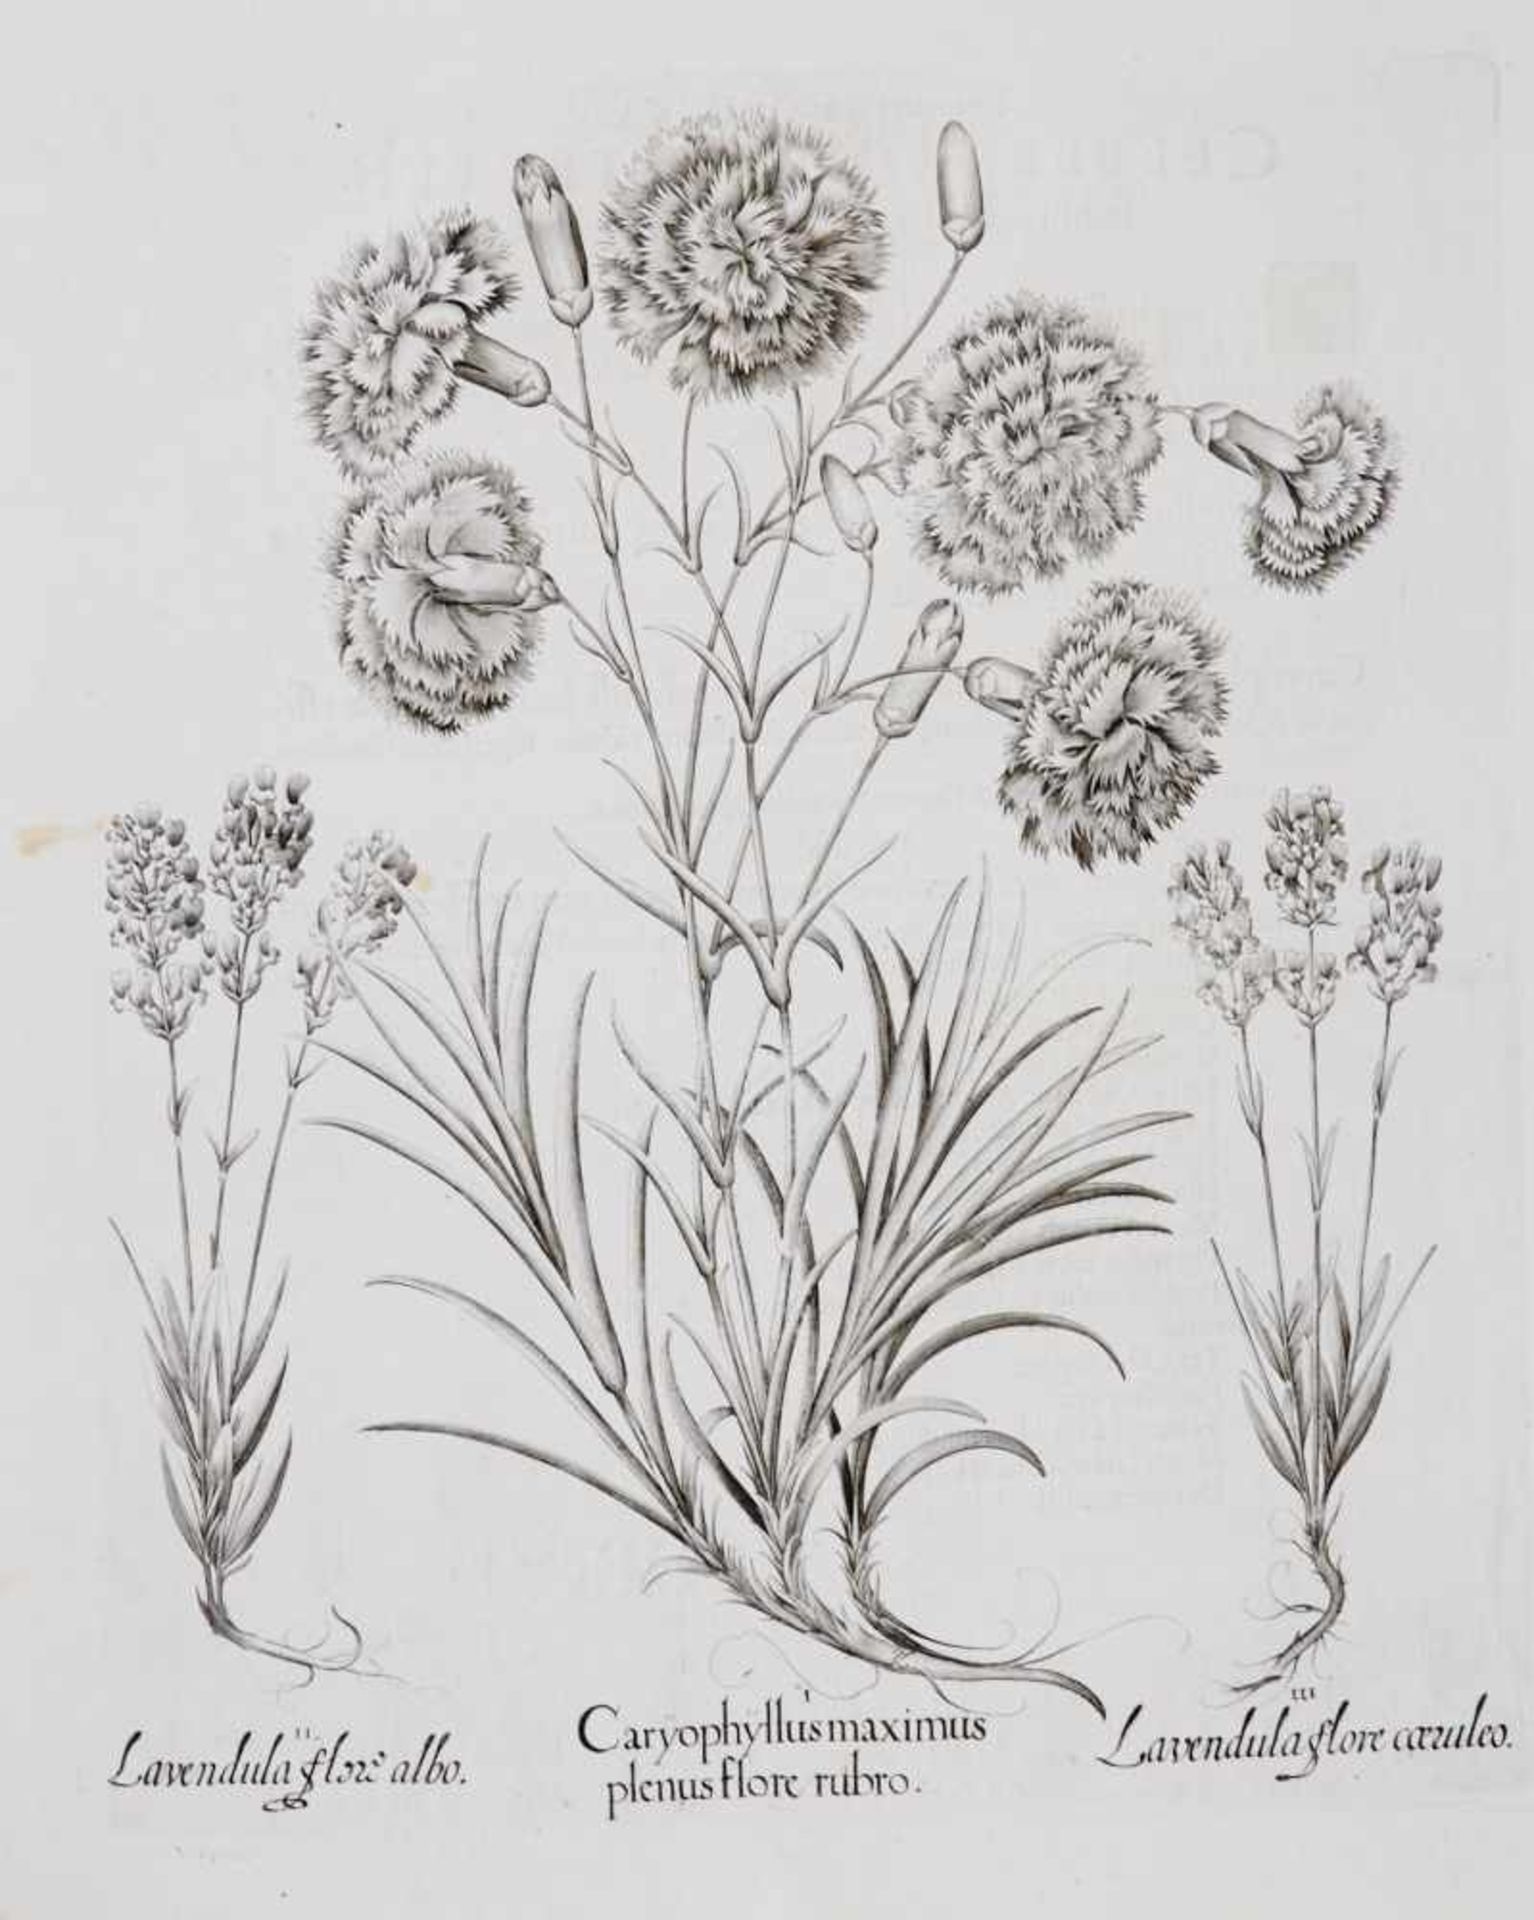 Botanik- Besler - "I. Caryophyllus maximus" - II. "Lavendula florealbo" - "III. Lavendula flore